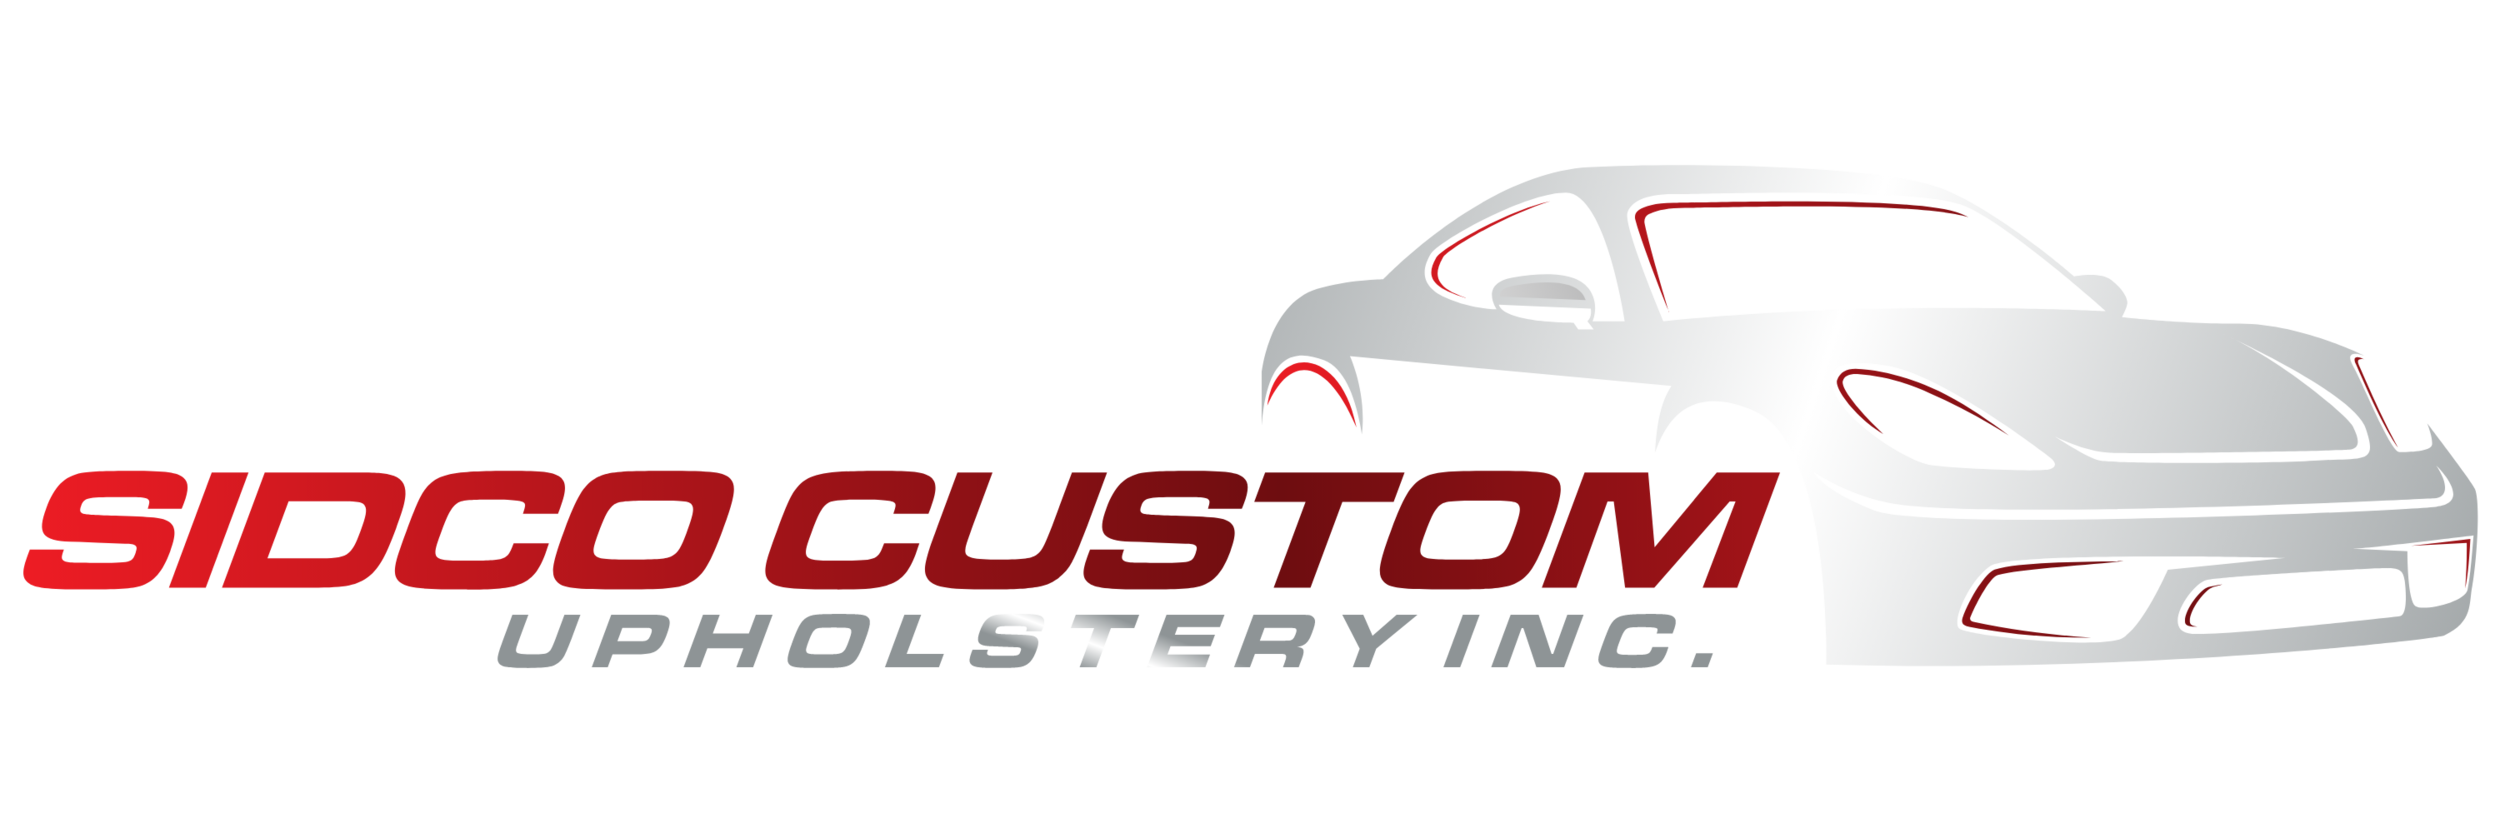 Sidco Custom Upholstery Inc.